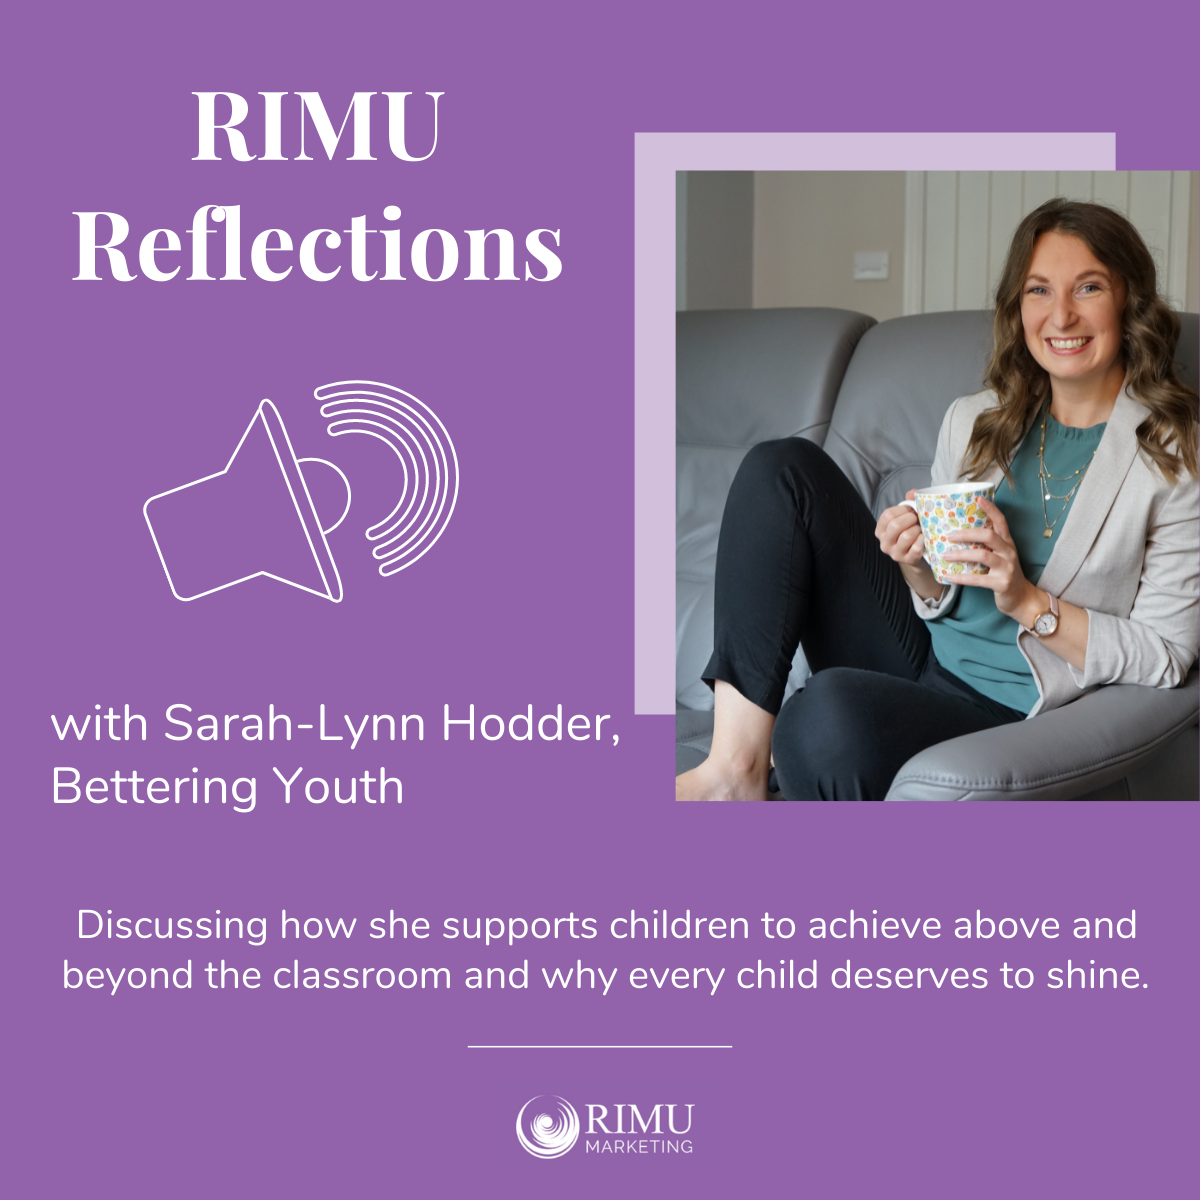 RIMU Reflections - an interview with Sarah-Lynn Hodder